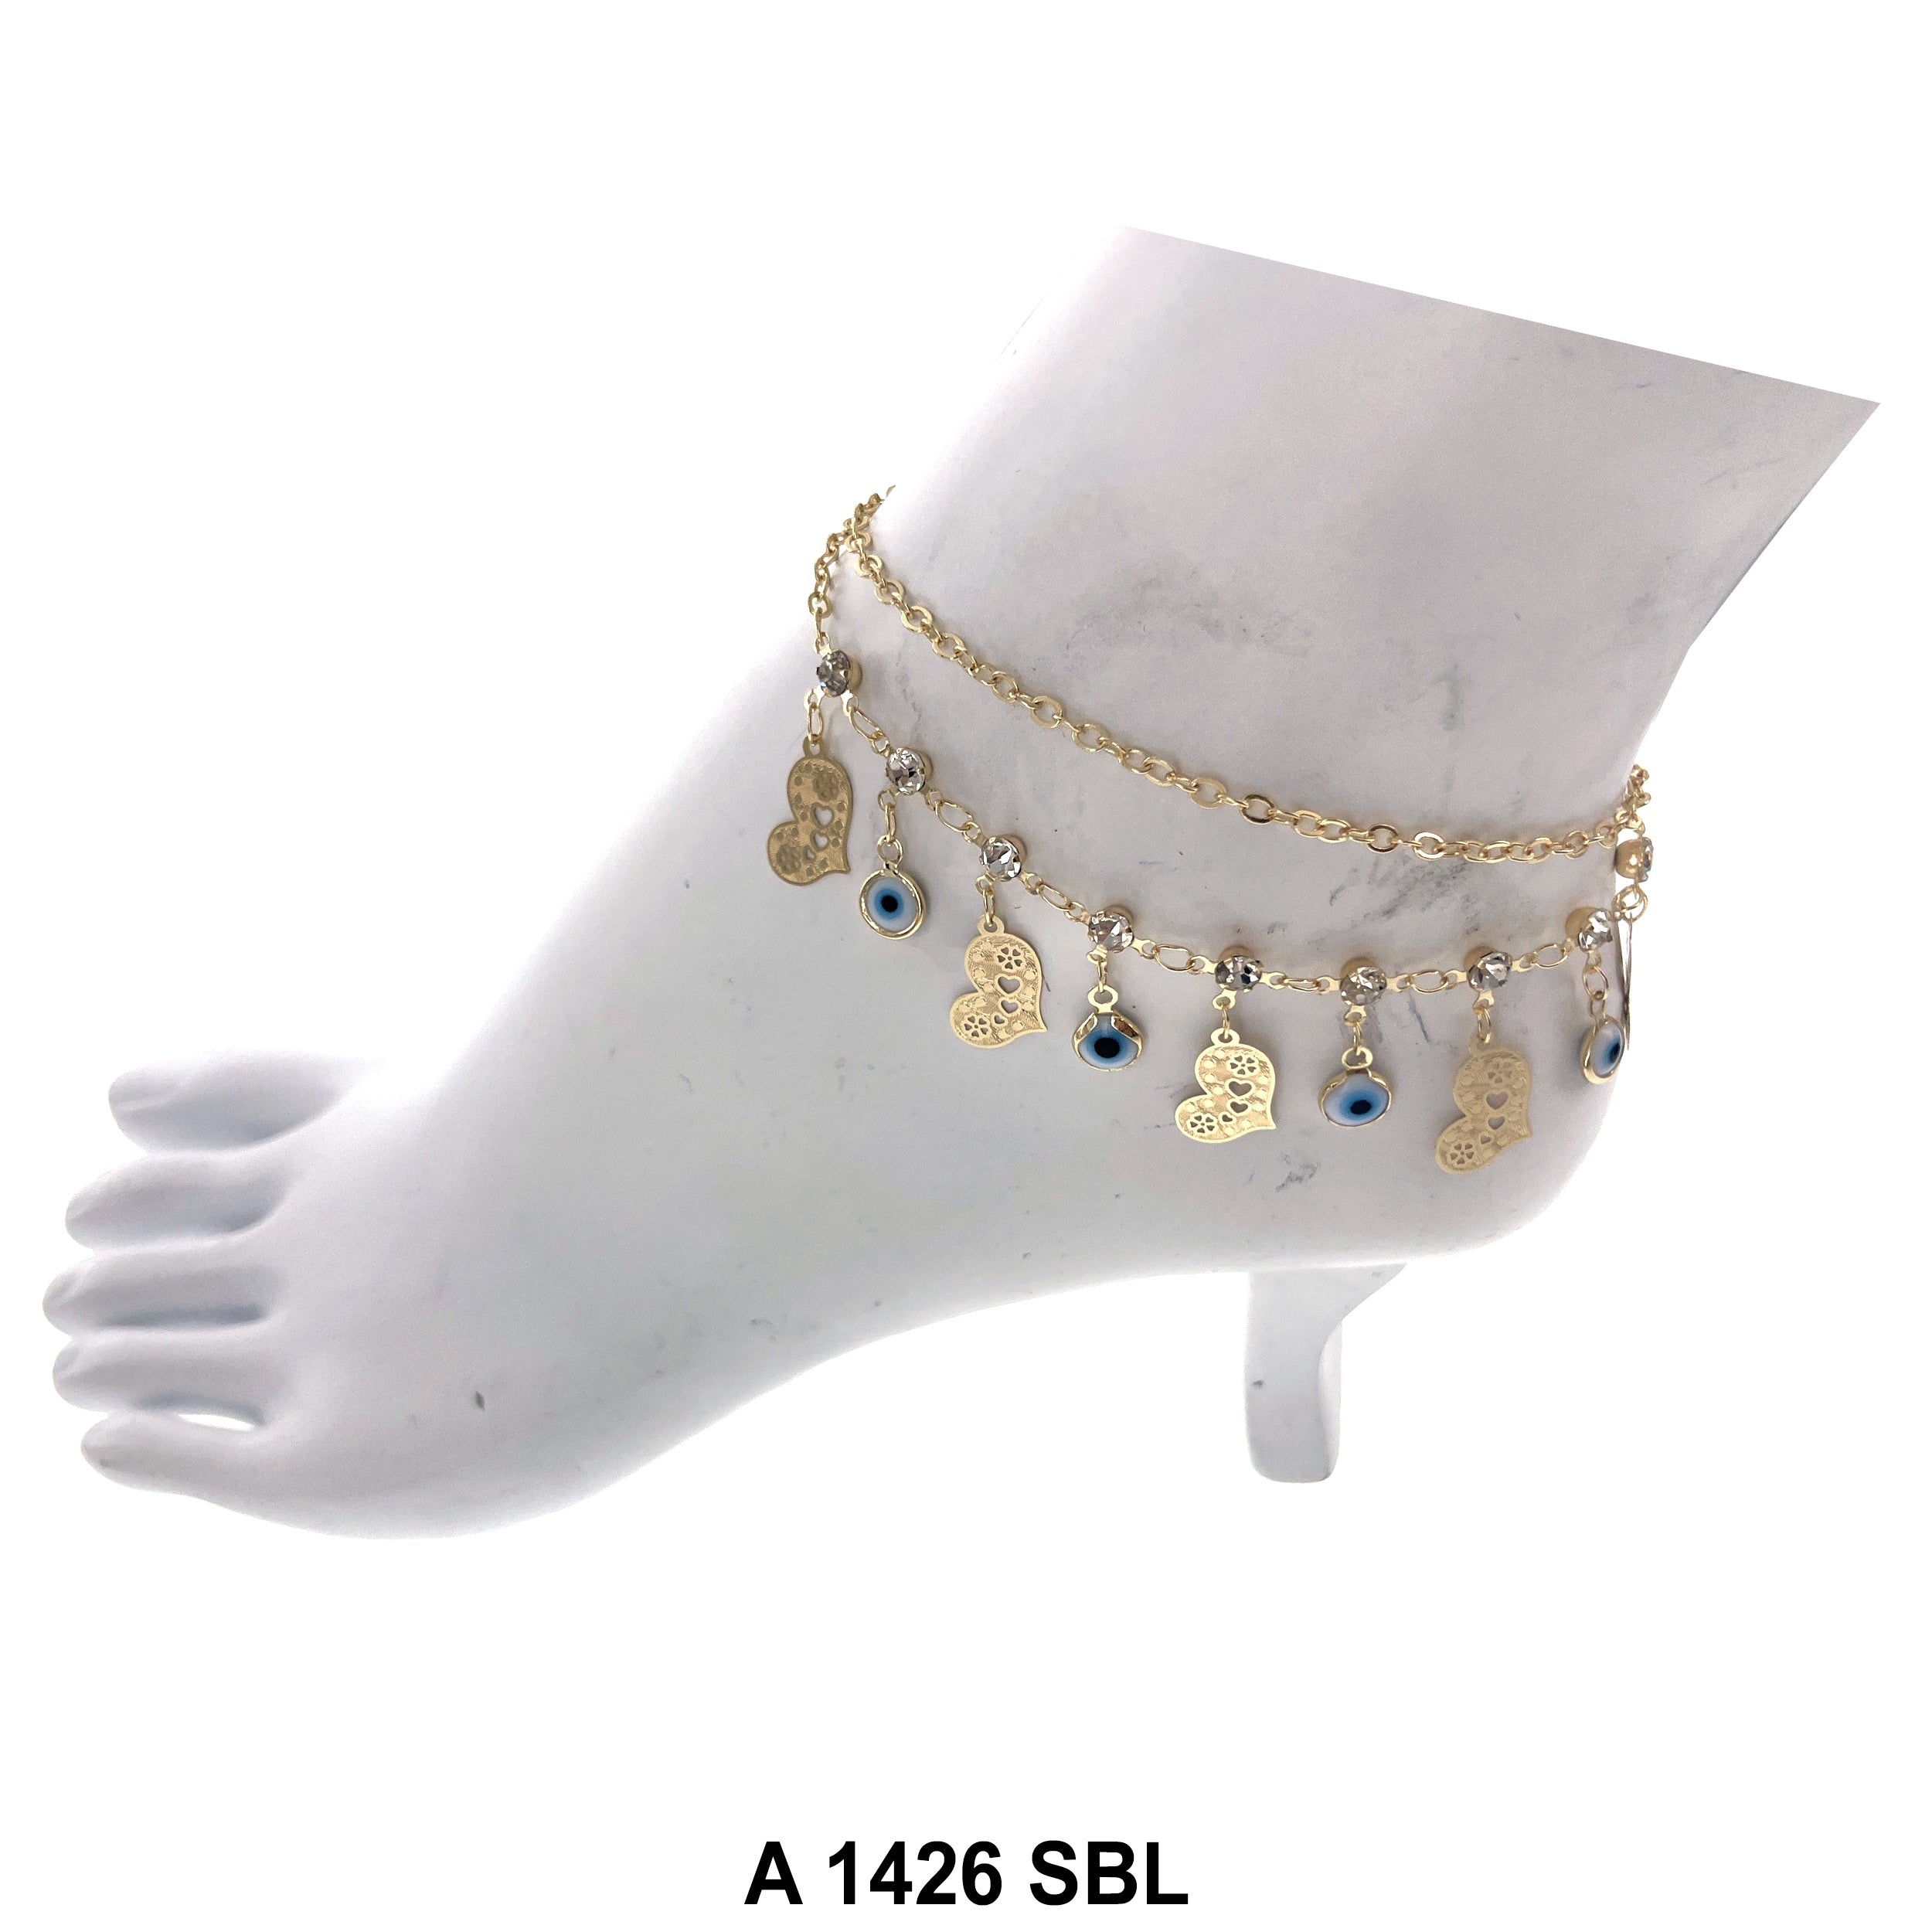 Fashion Anklets A 1426 SBL